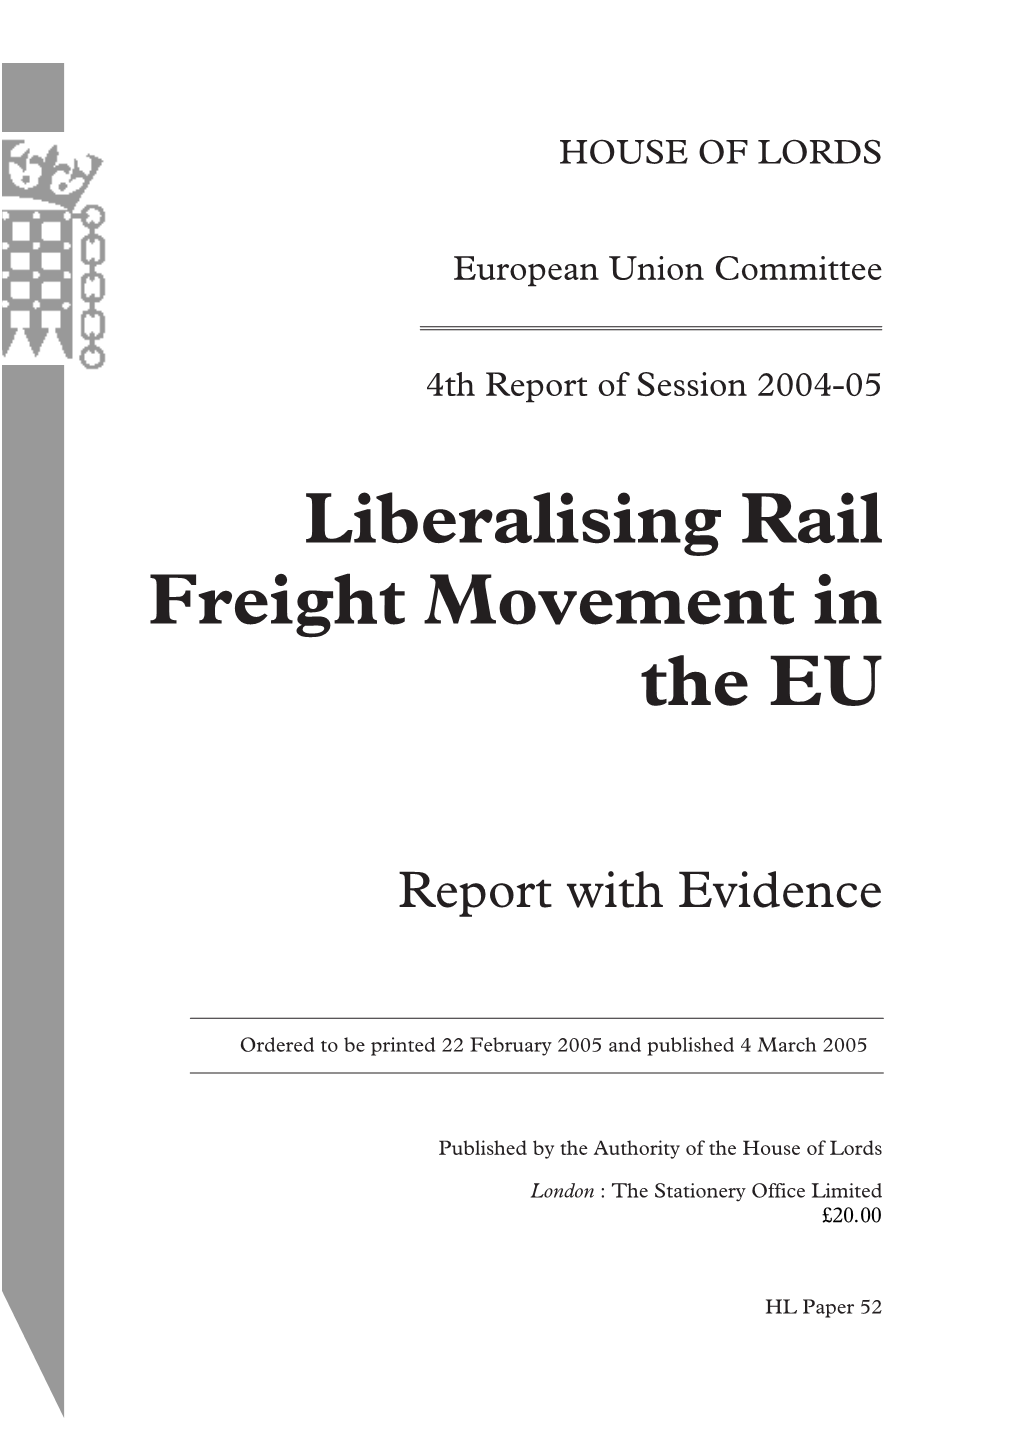 Liberalising Rail Freight Movement in the EU